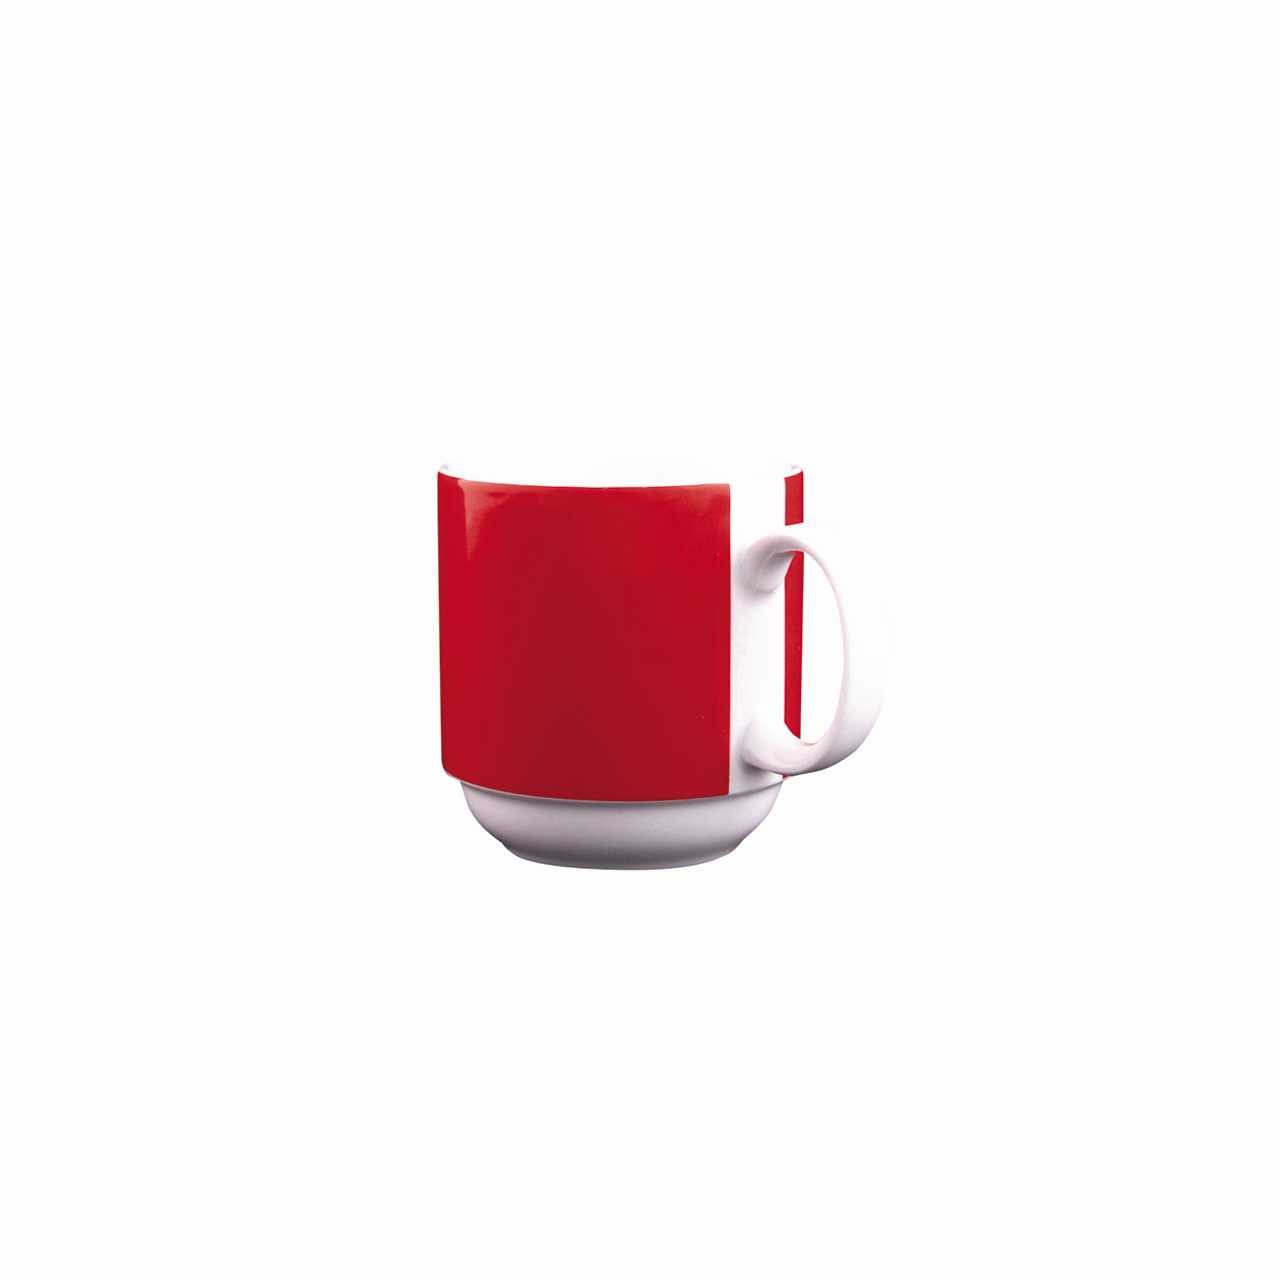 Kaffeebecher - Inhalt 0,30 ltr., Eschenbach Form Funktion - rot, ohne Untertasse